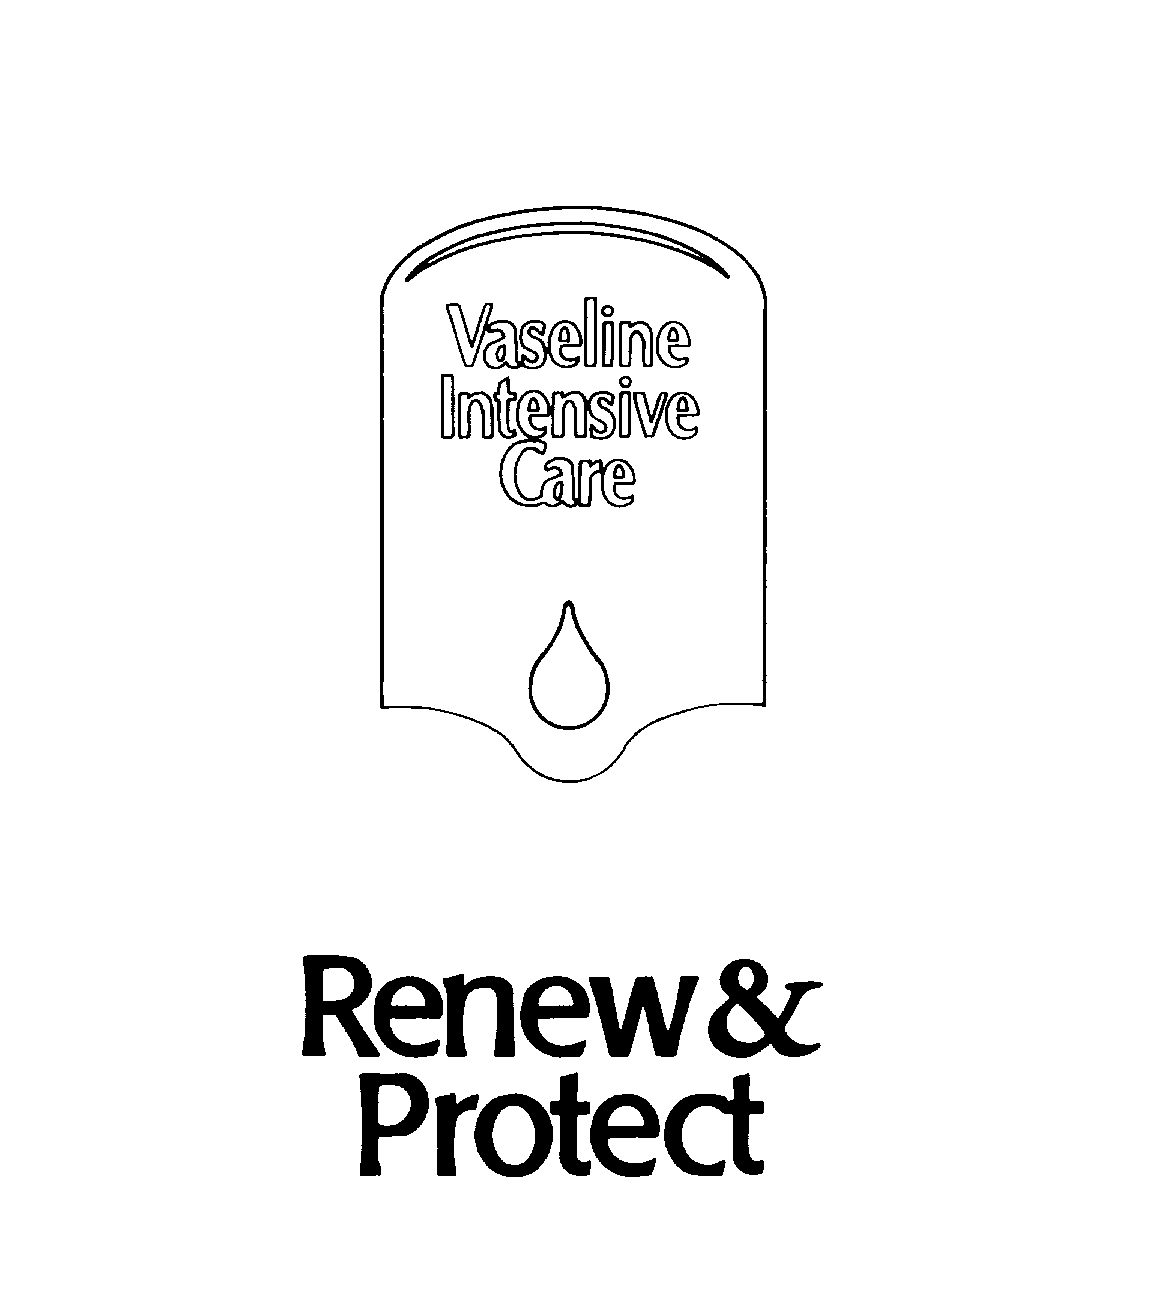  VASELINE INTENSIVE CARE RENEW &amp; PROTECT